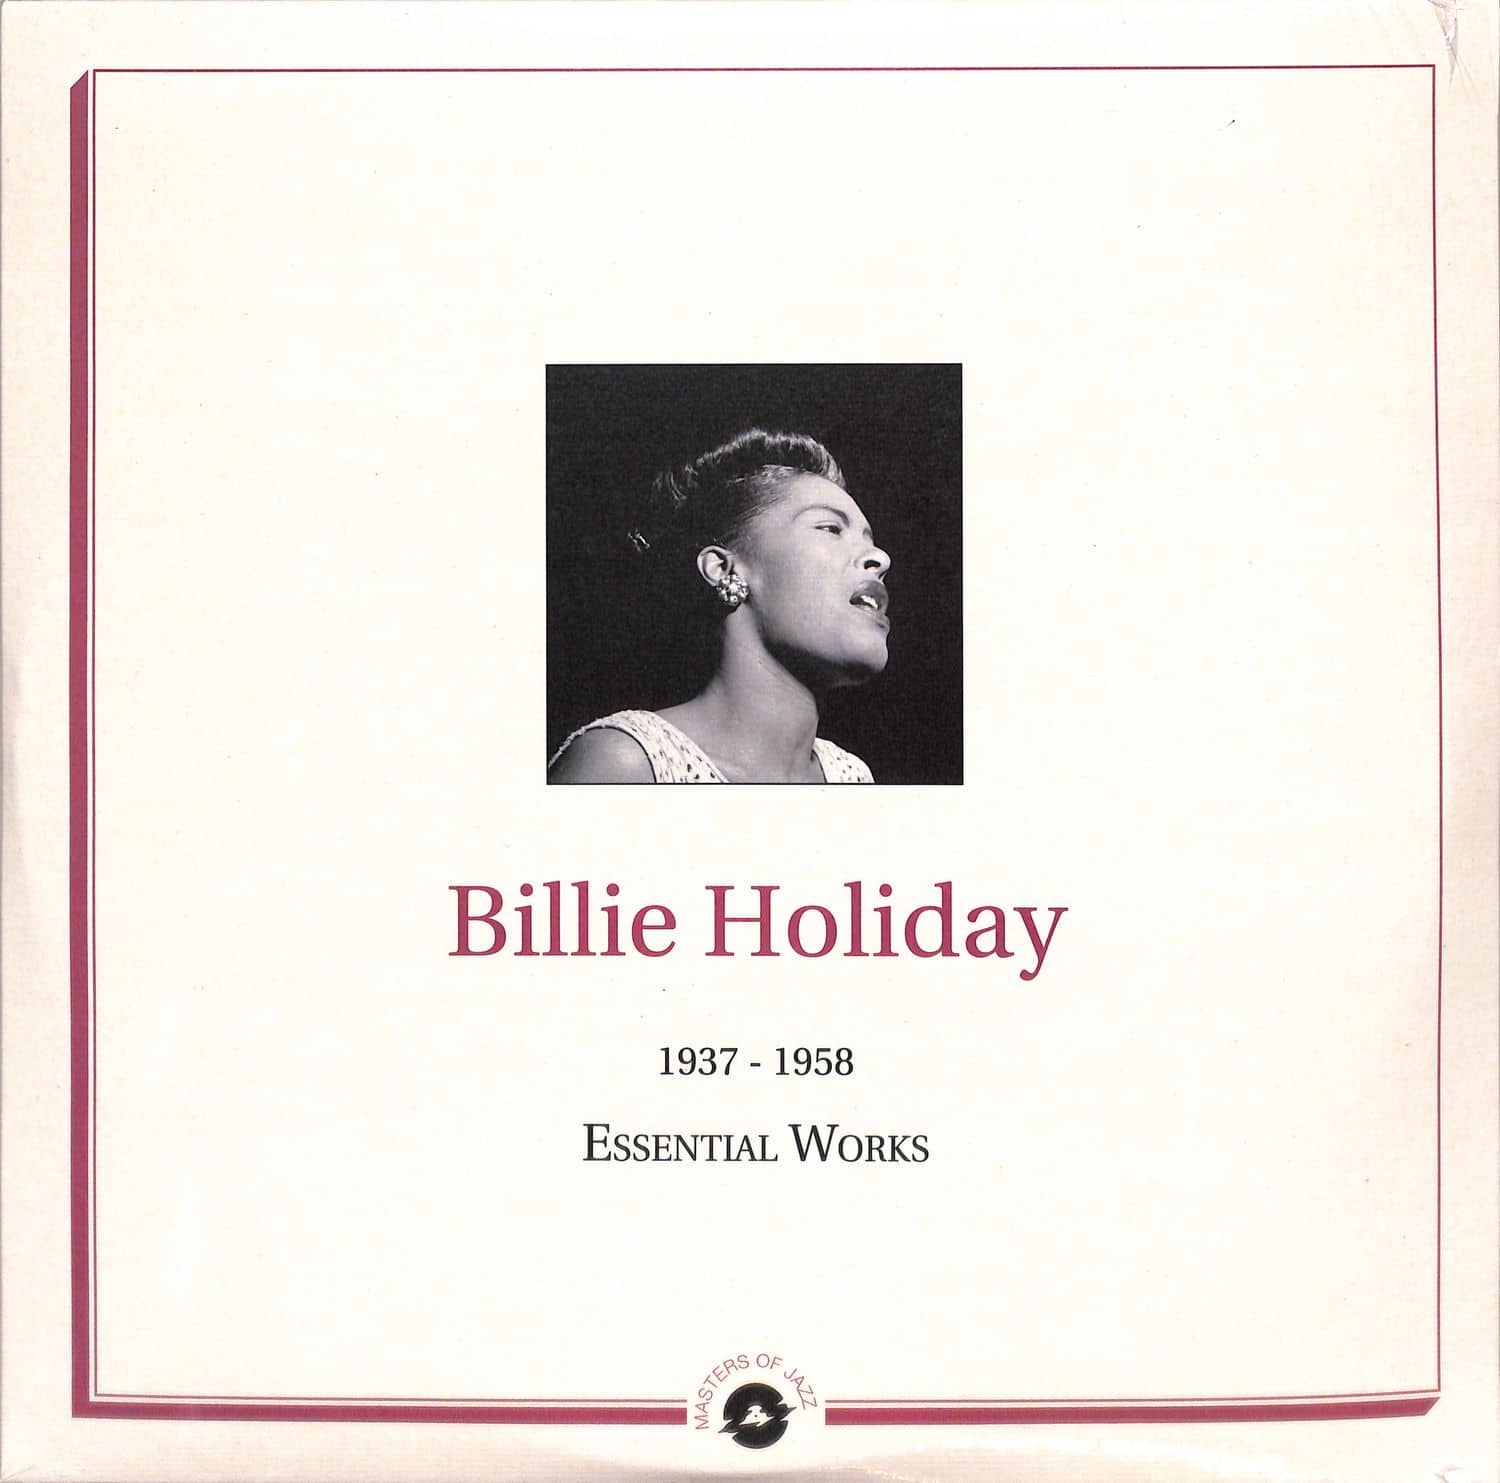 Billie Holiday - ESSENTIAL WORKS: 1937-1958 